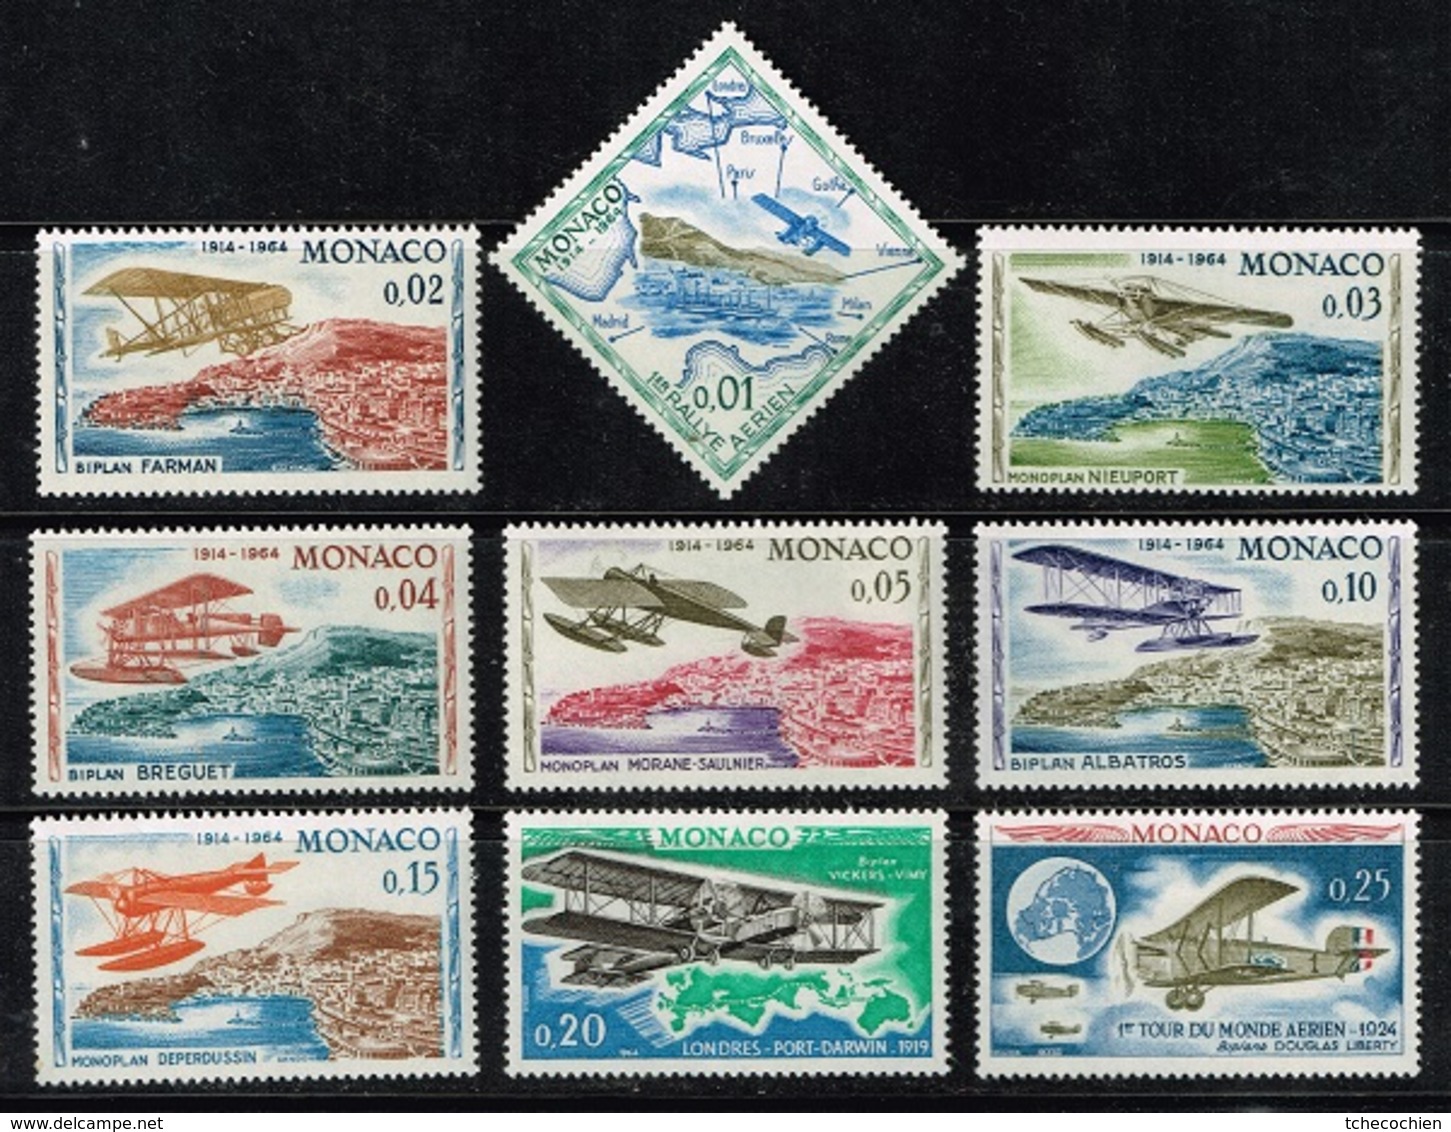 Monaco - 1964 - Y&T N° 637* To 645* - Air Rally - Unused Stamps